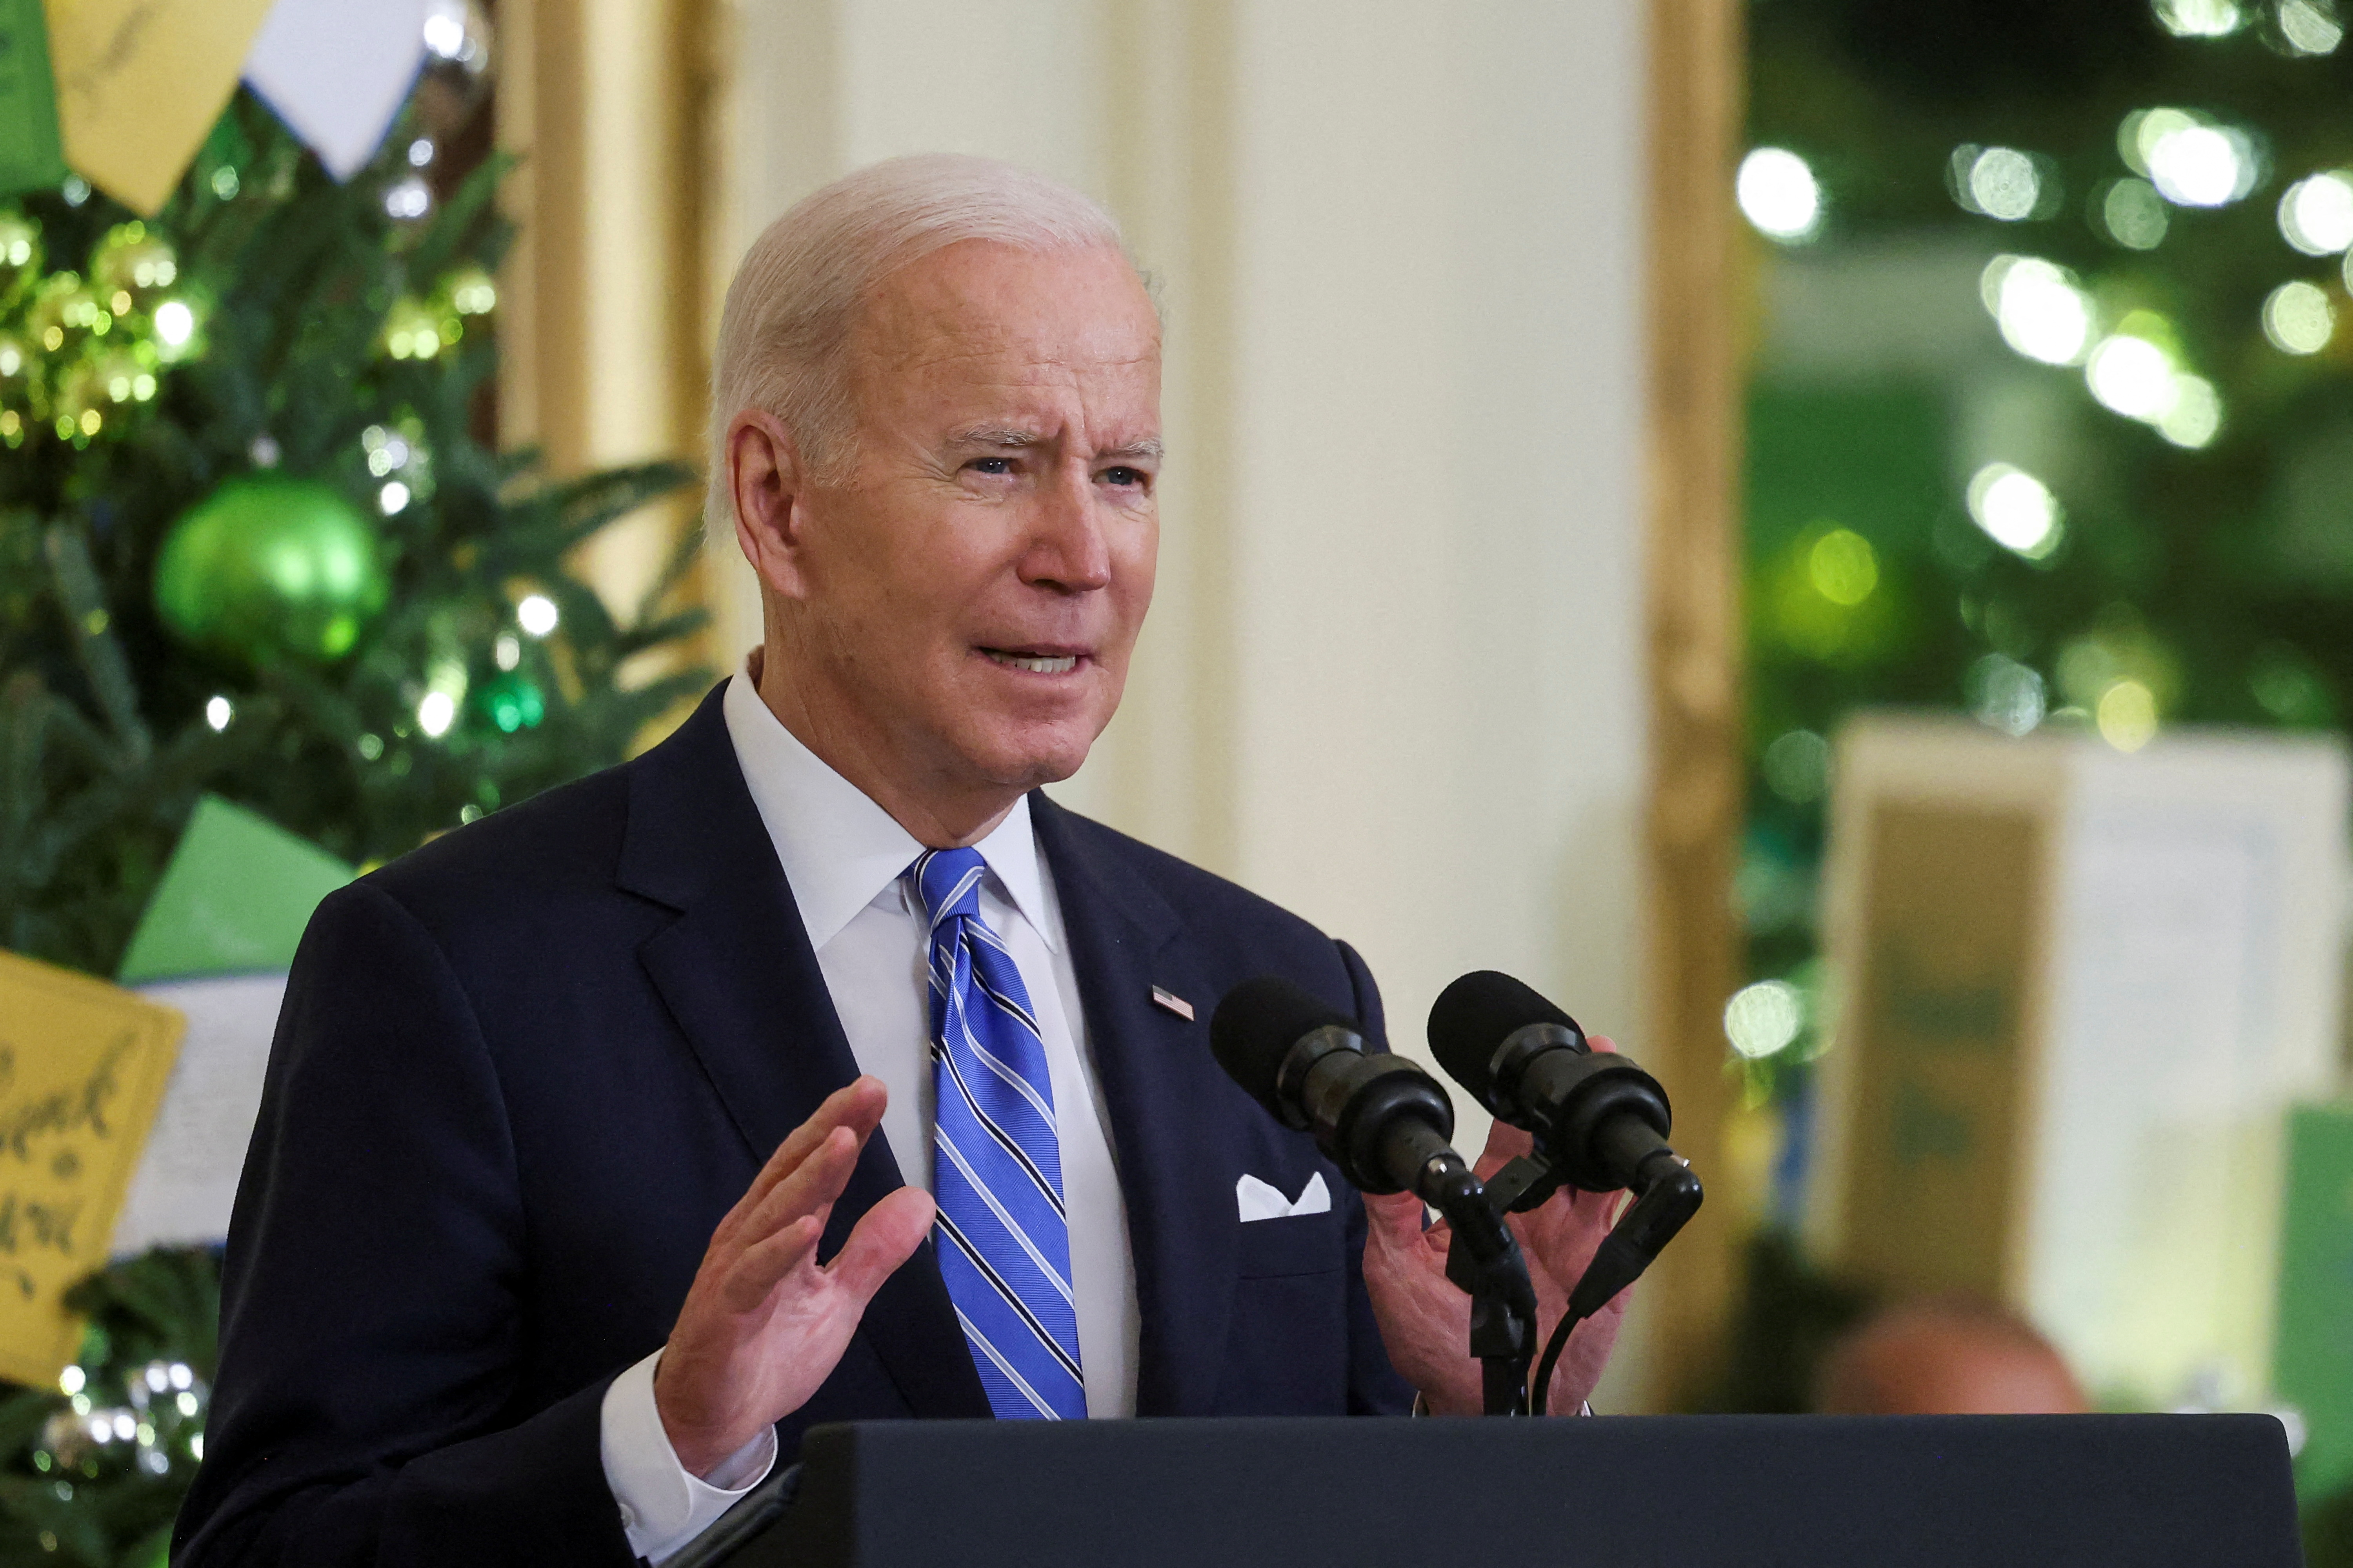 U.S. President Joe Biden speaks at the Medals of Honor ceremony in Washington, U.S., December 16, 2021. REUTERS/Evelyn Hockstein